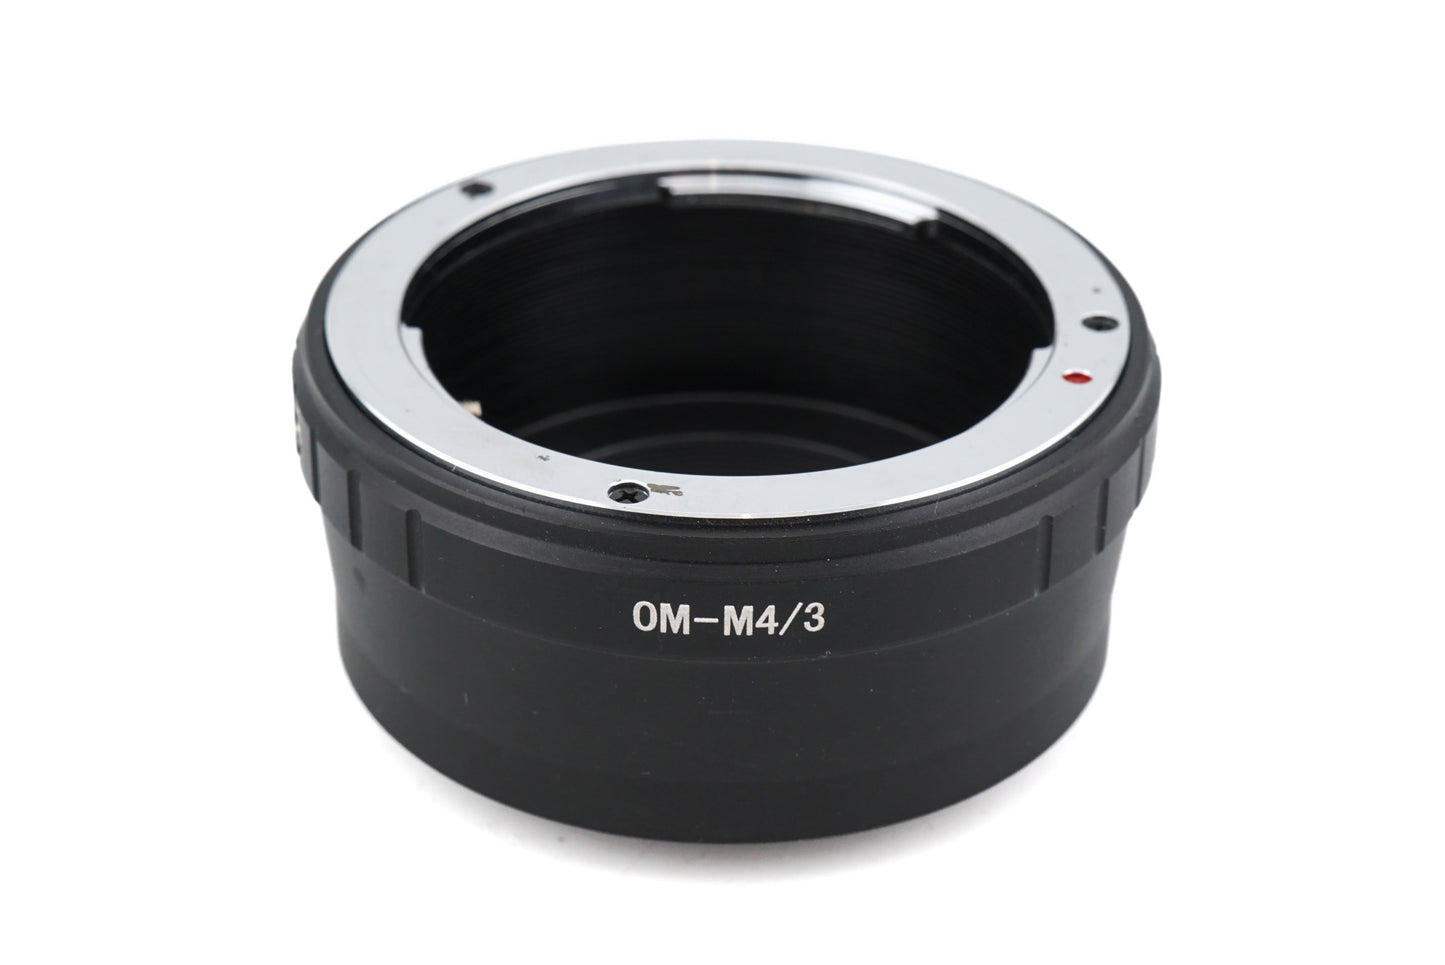 Generic Olympus OM - Micro Four Thirds (OM - M4/3) Adapter - Lens Adapter